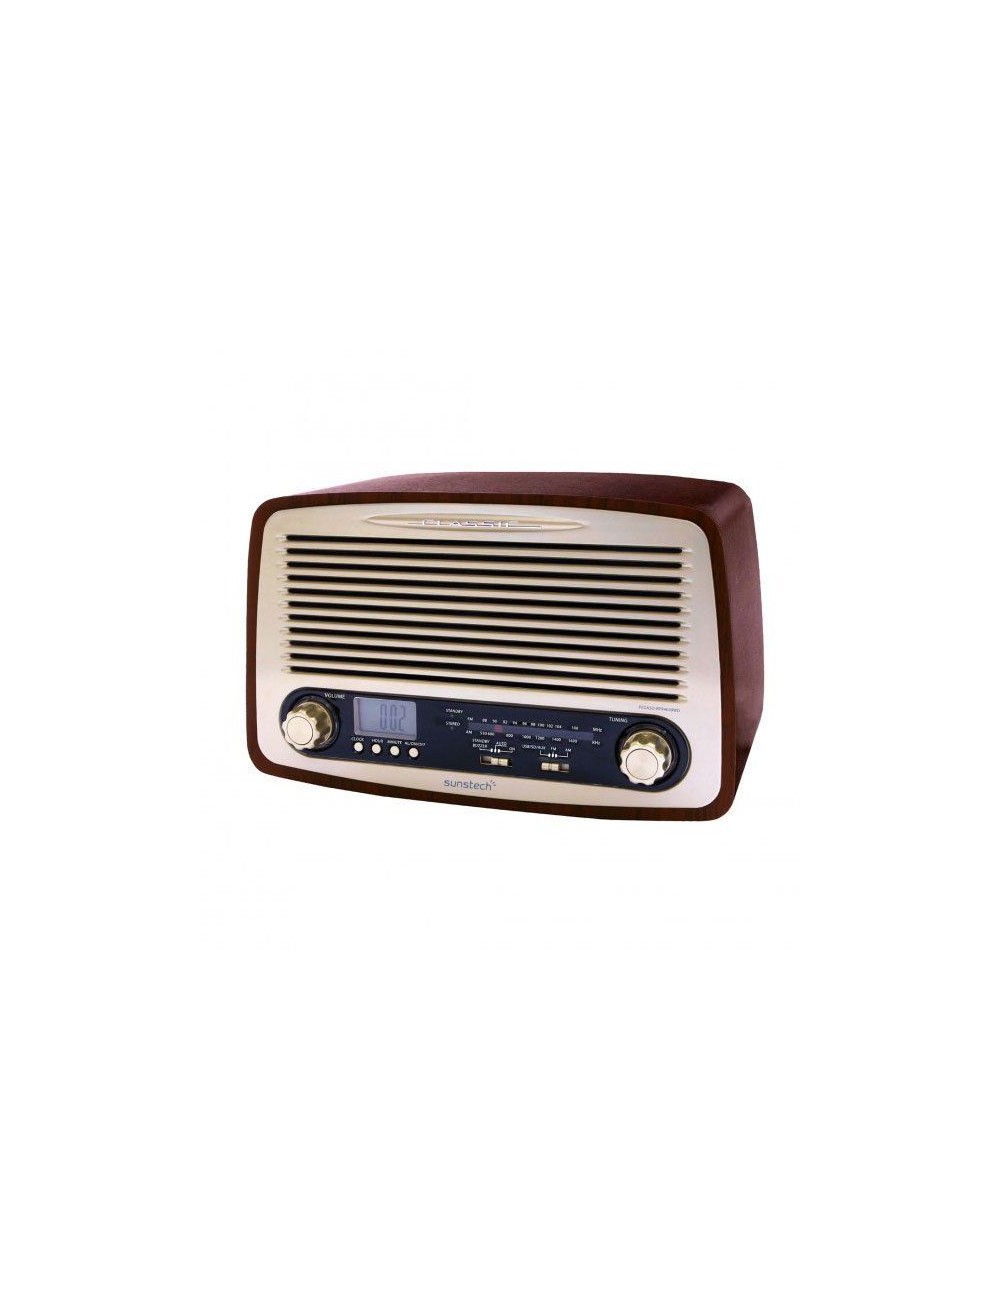 Sunstech Portable digital AM/FM radio silver Portátil Analógica